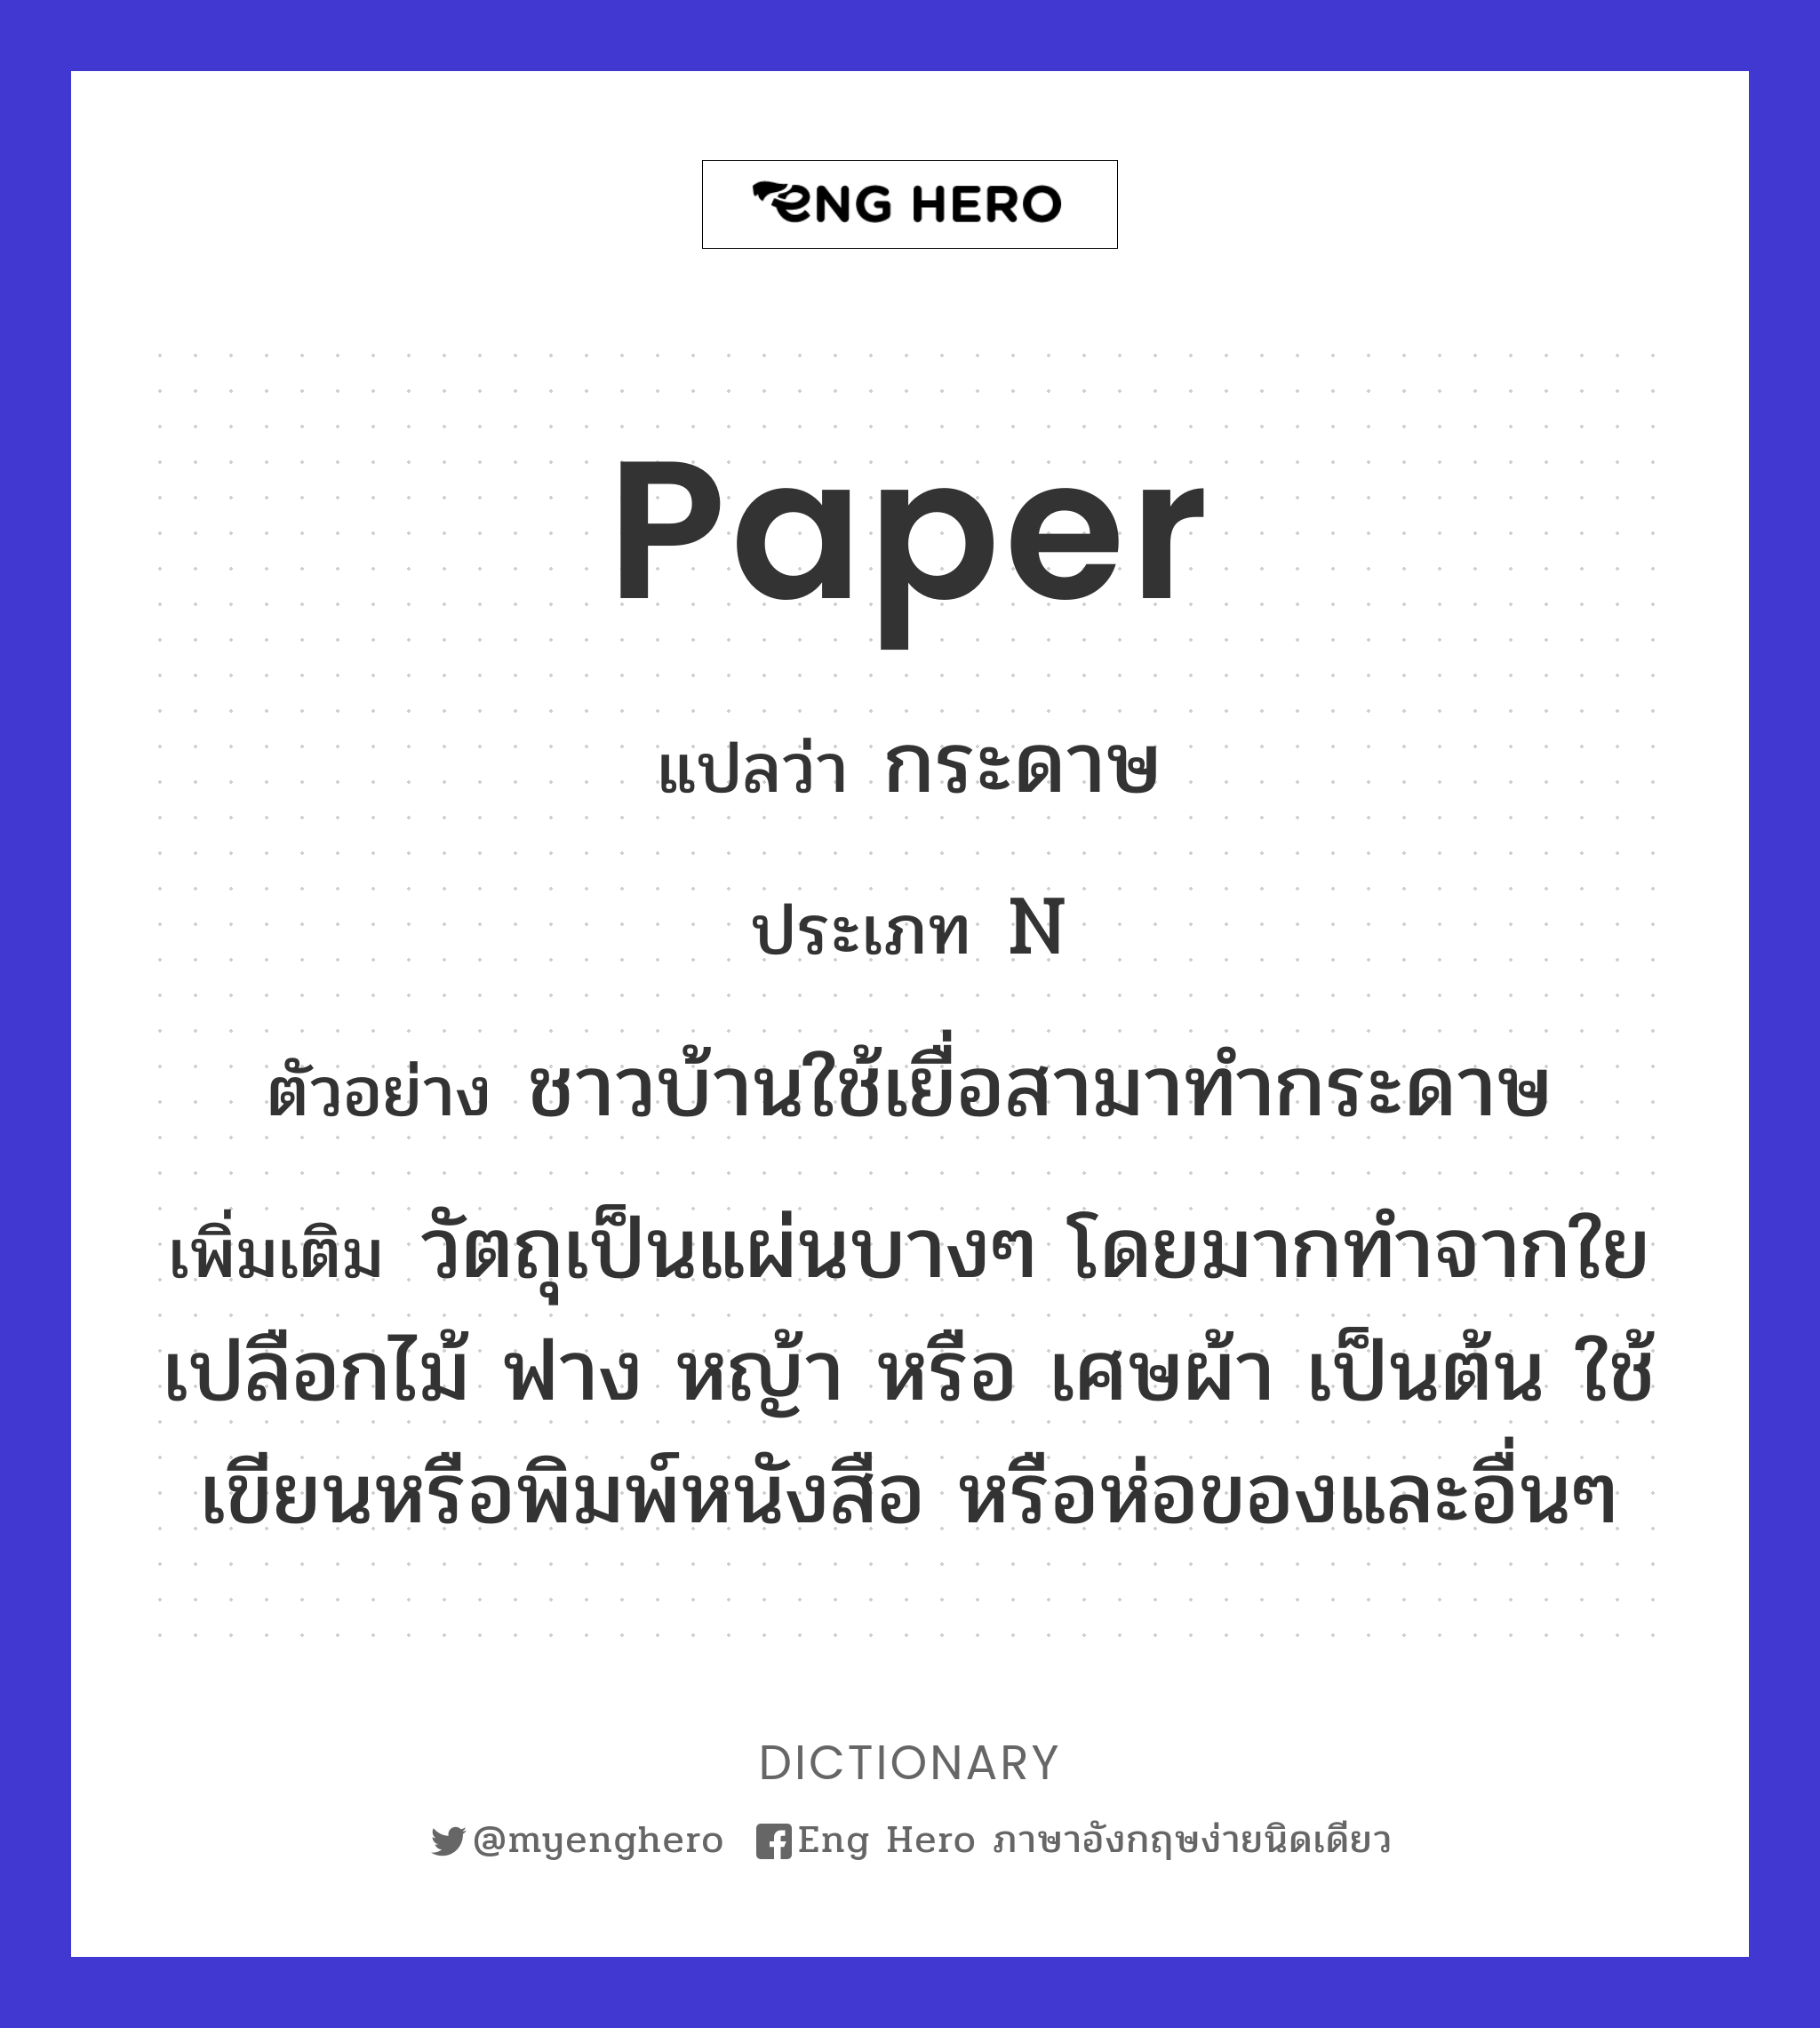 paper